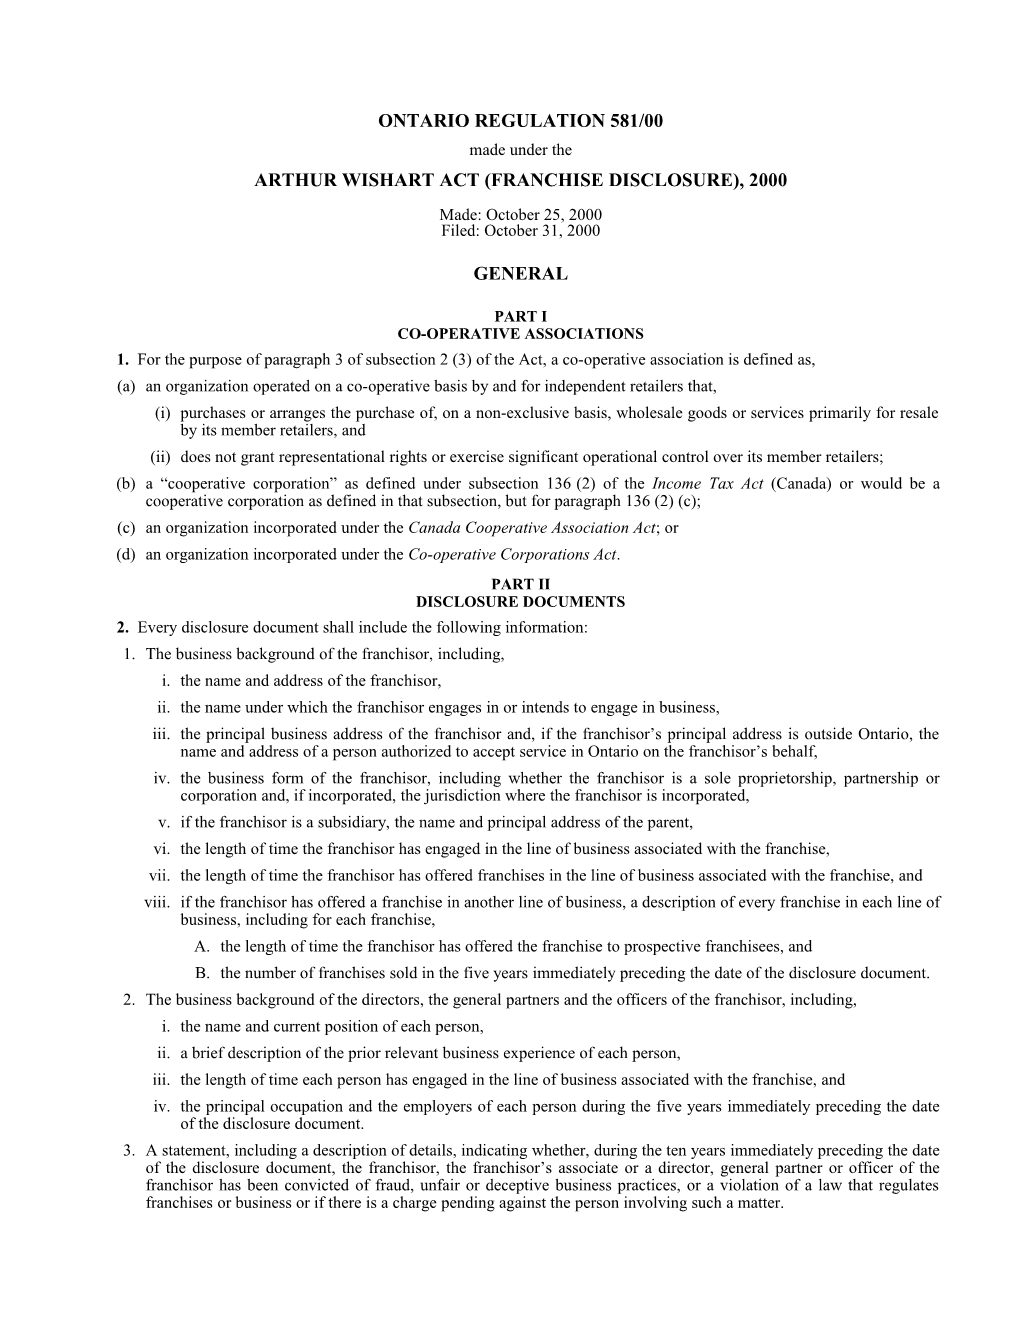 ARTHUR WISHART ACT (FRANCHISE DISCLOSURE), 2000 - O. Reg. 581/00